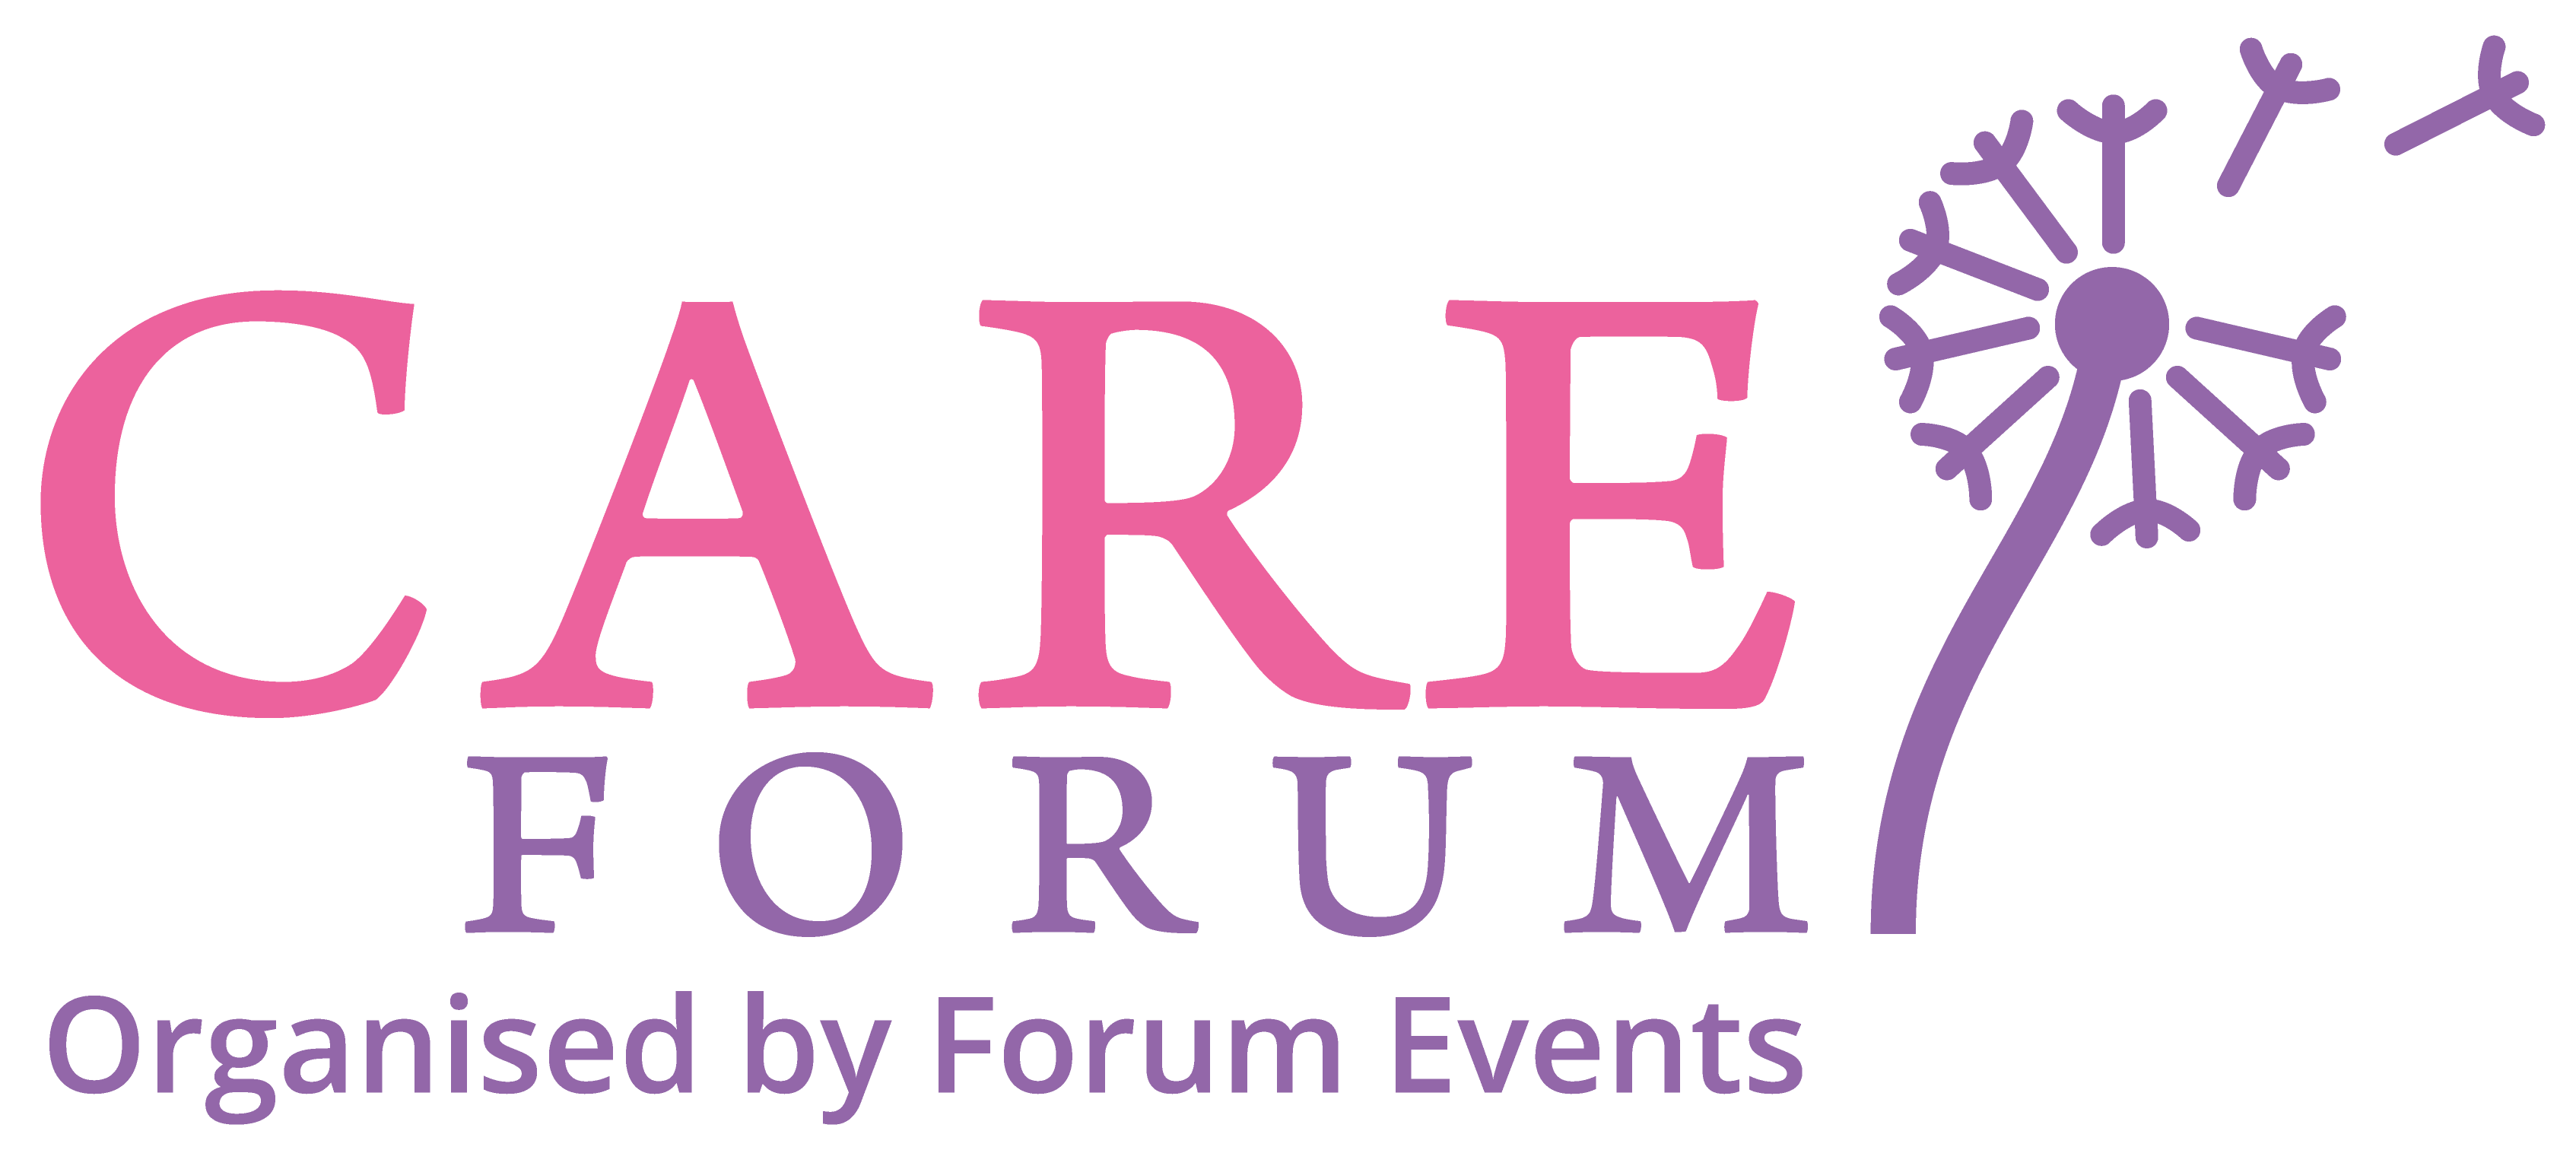 Care Forum | Forum Events Ltd